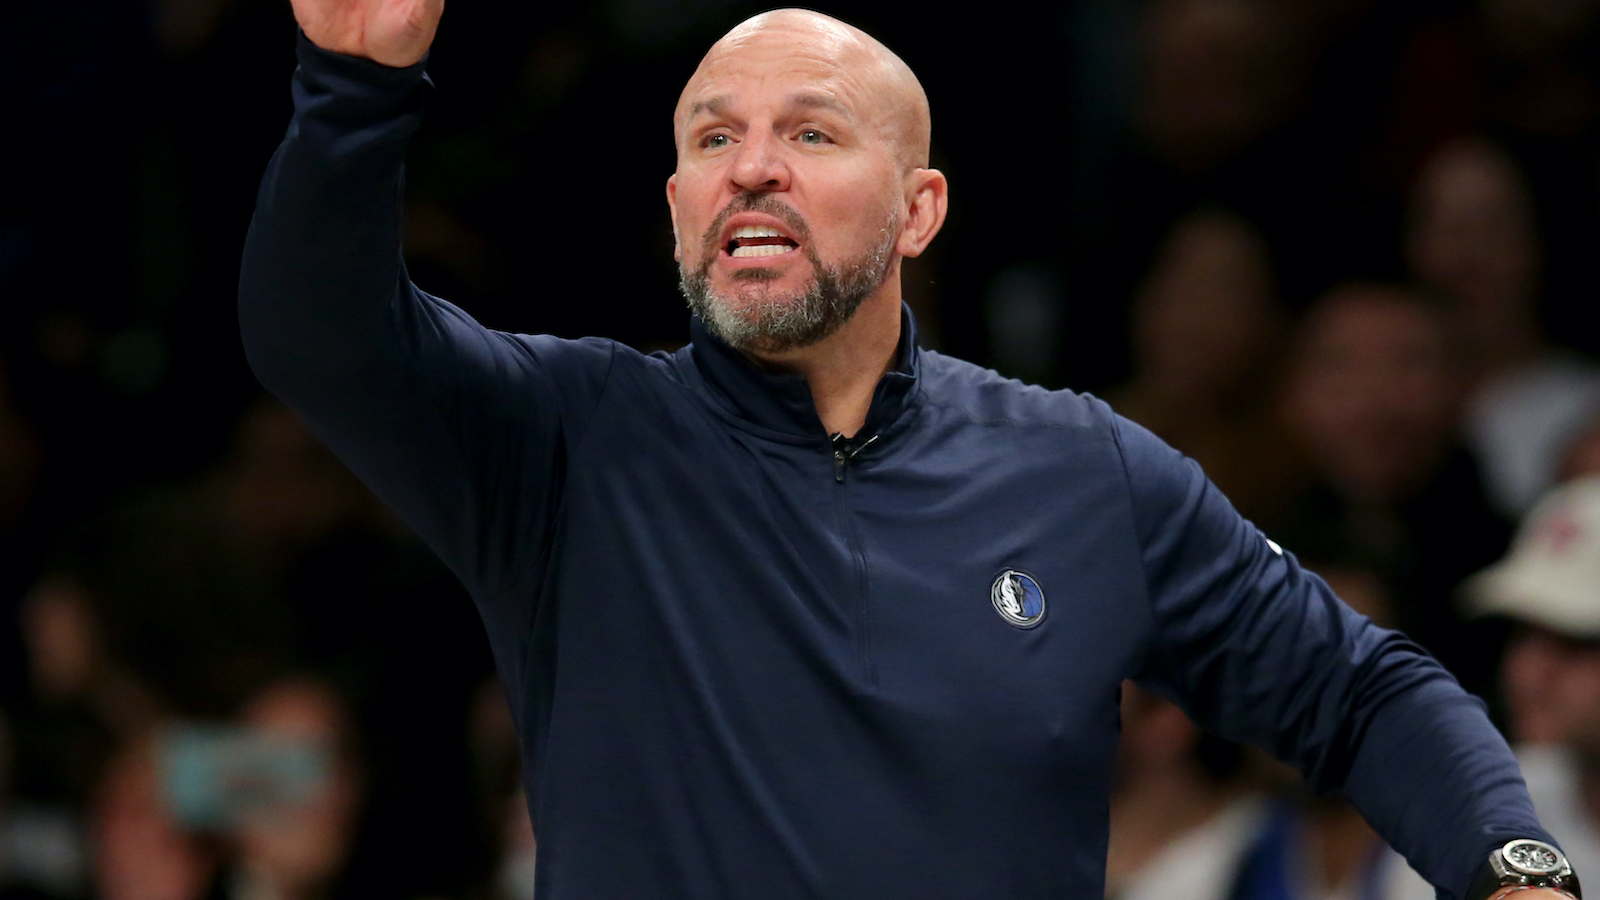 Mavericks' Jason Kidd has fond memories of time as Nets coach